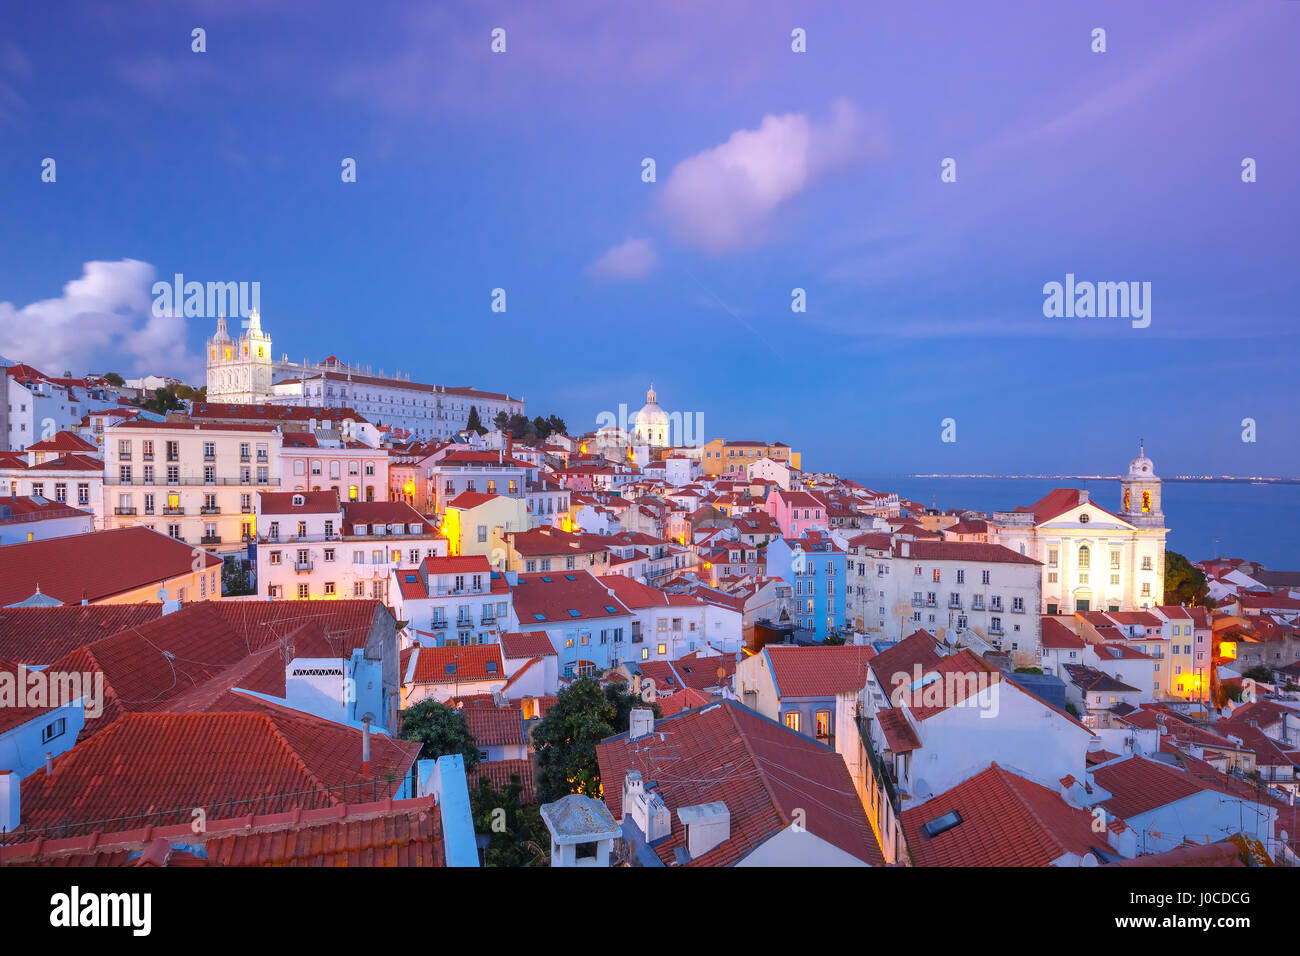 Alfama at night, Lisbon, Portugal Stock Photo